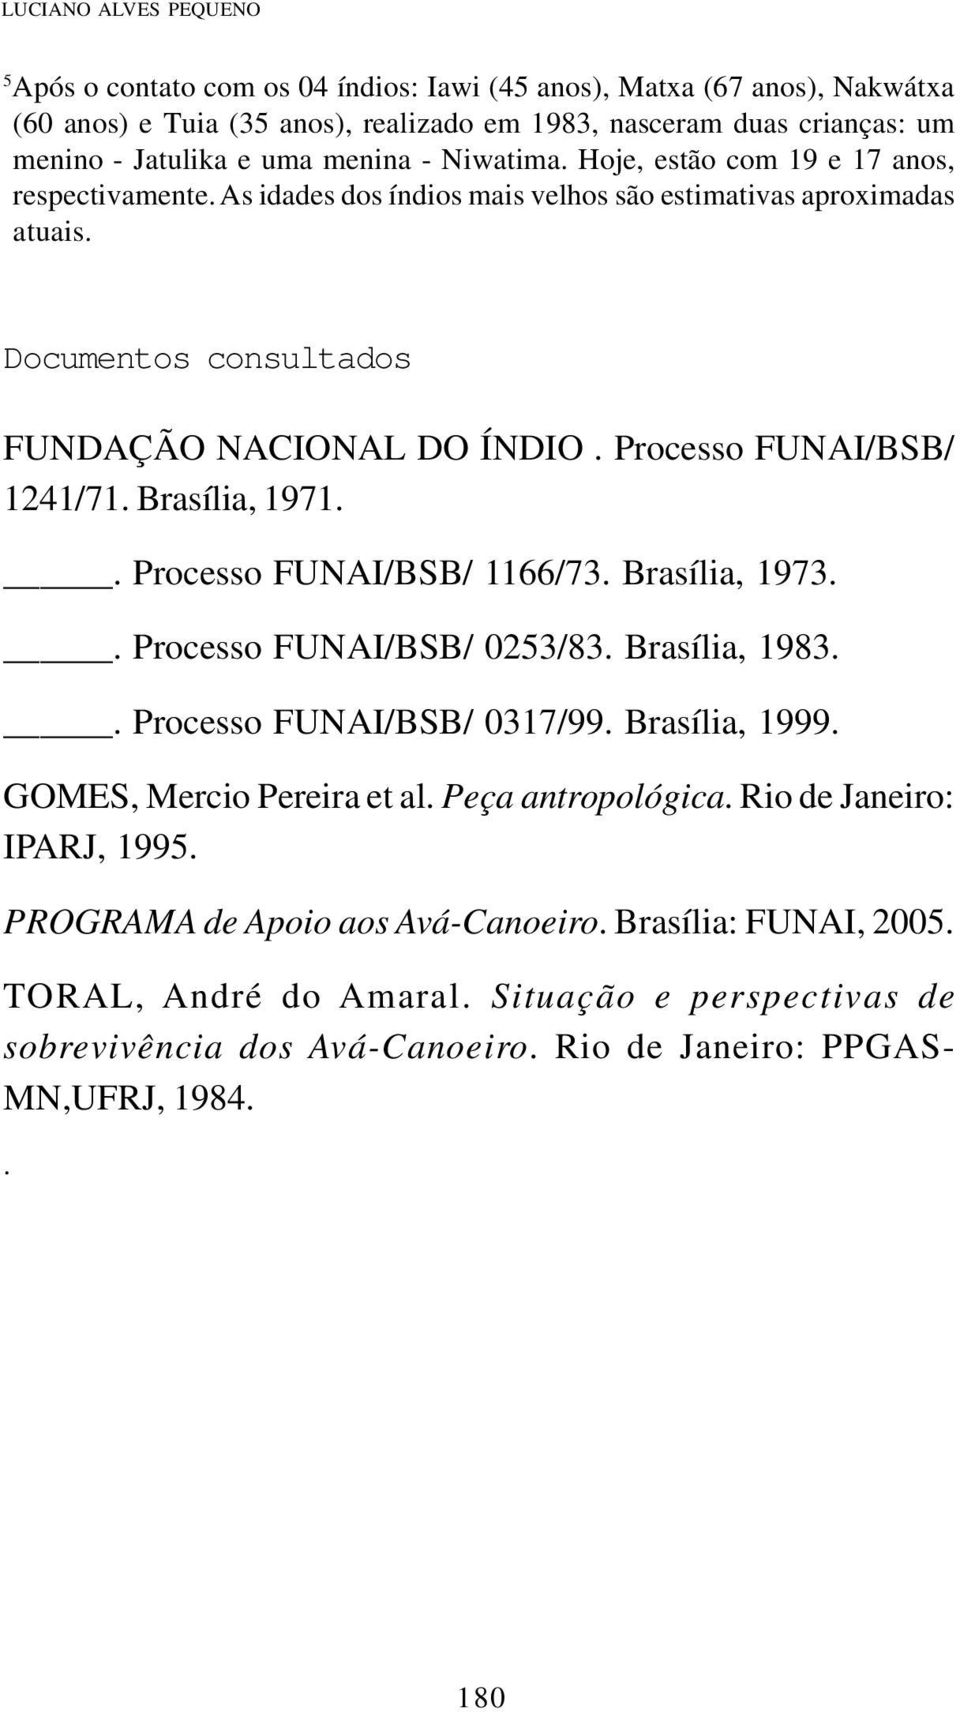 Processo FUNAI/BSB/ 1241/71. Brasília, 1971.. Processo FUNAI/BSB/ 1166/73. Brasília, 1973.. Processo FUNAI/BSB/ 0253/83. Brasília, 1983.. Processo FUNAI/BSB/ 0317/99. Brasília, 1999.